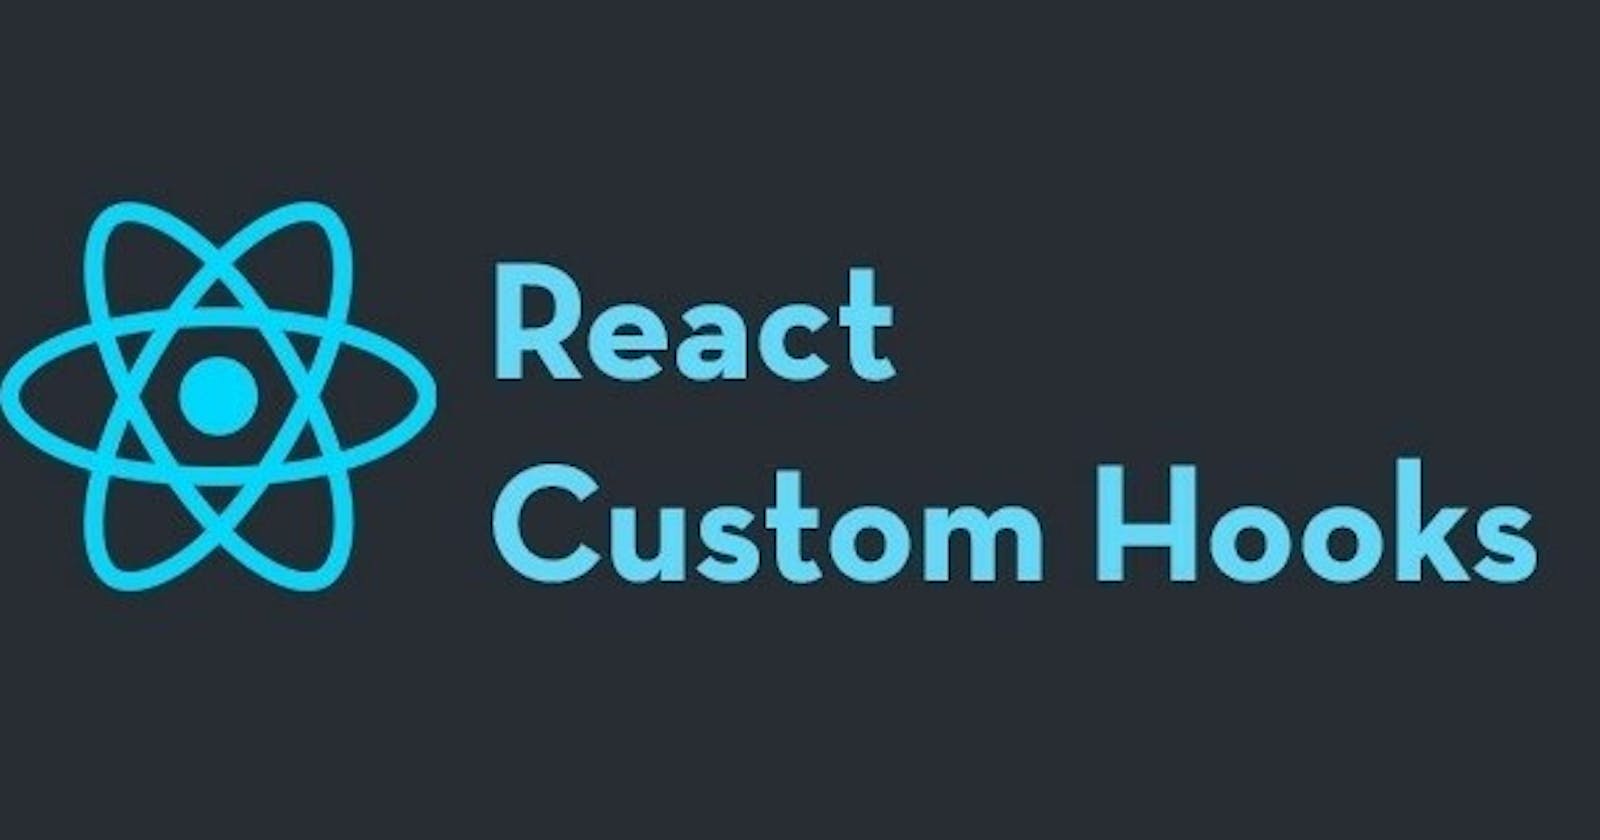 Create your own custom hook in React!